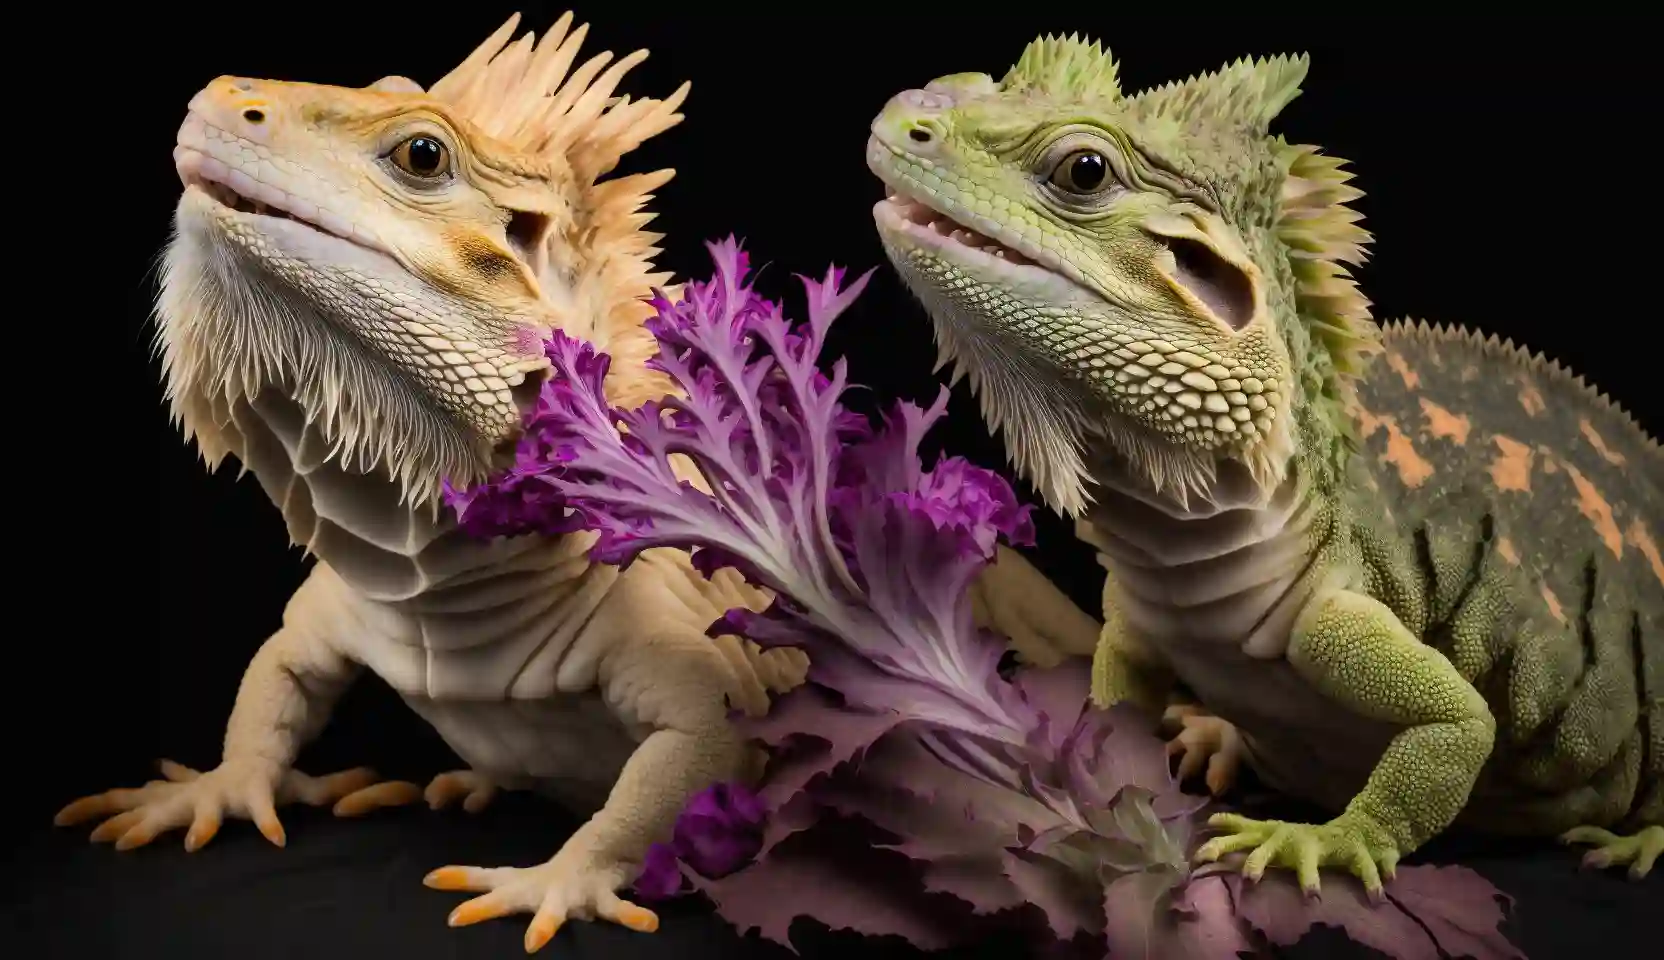 Can Bearded Dragons Eat Ornamental Kale?